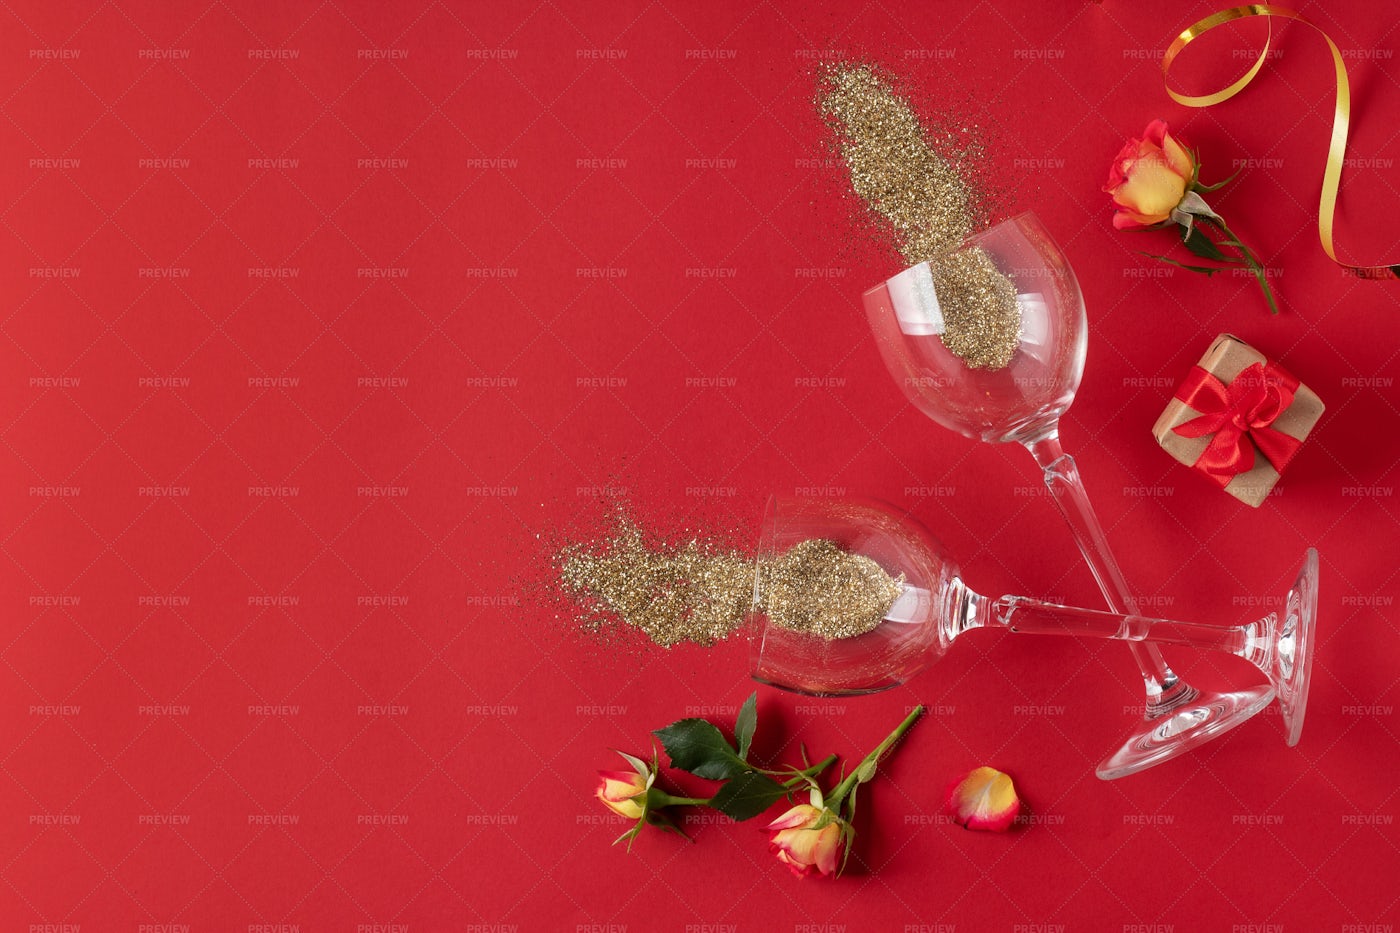 Sparkles In Wineglasses: Stock Photos